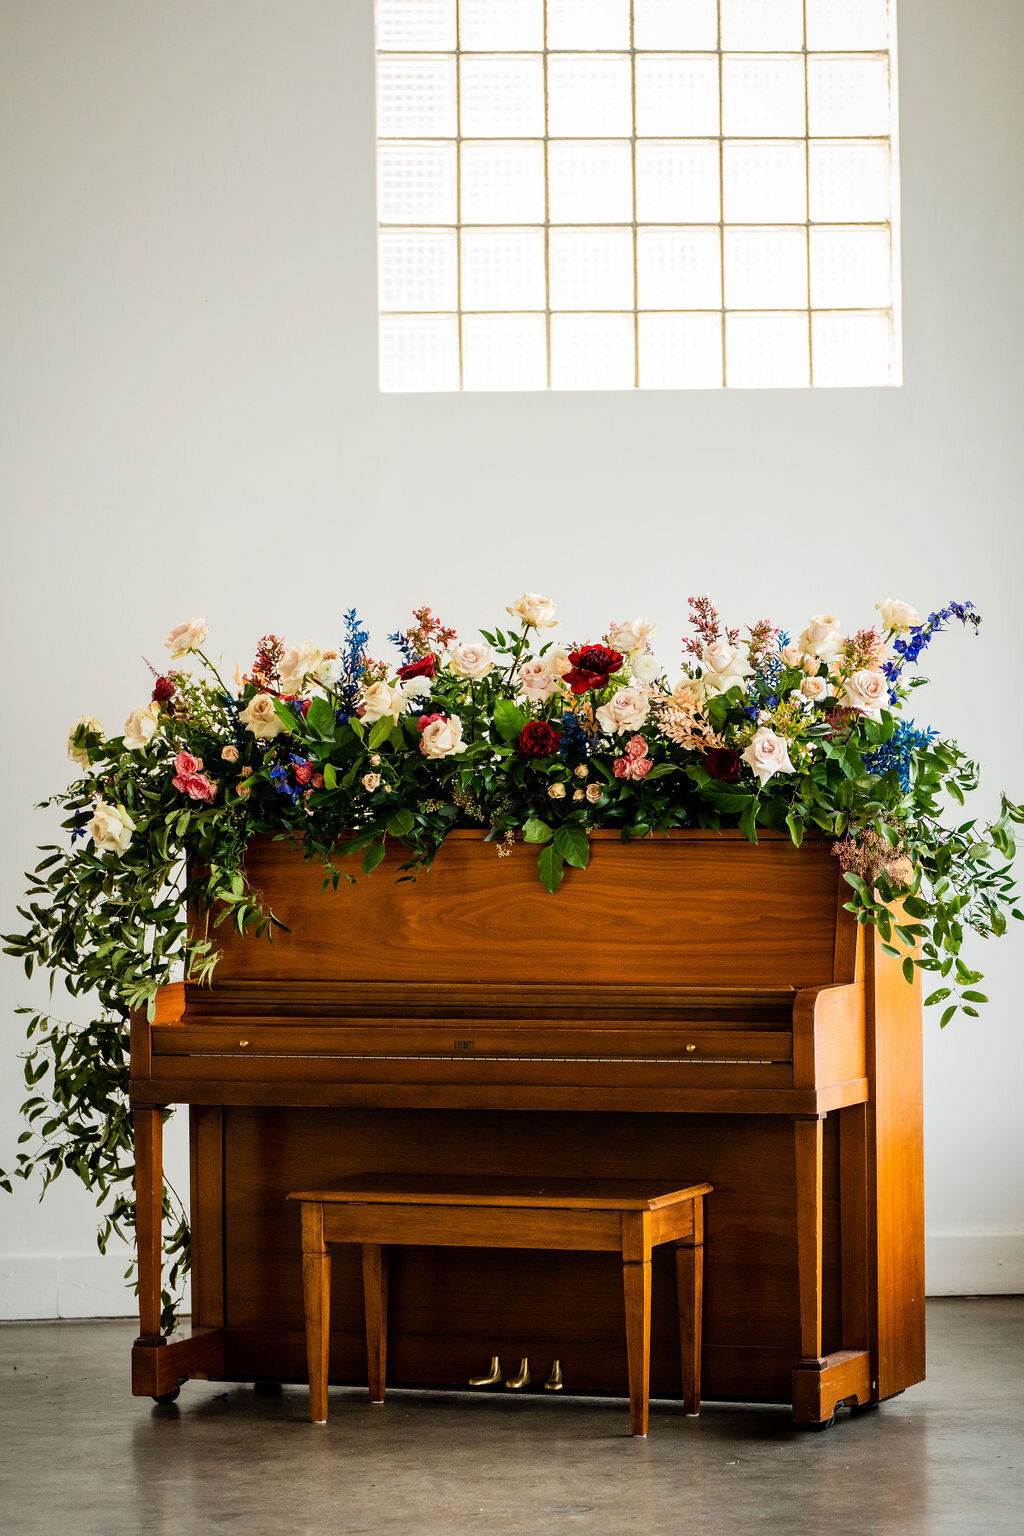 memphis-wedding-florist-venue-propcellar-red-blue-fall-november-flowers